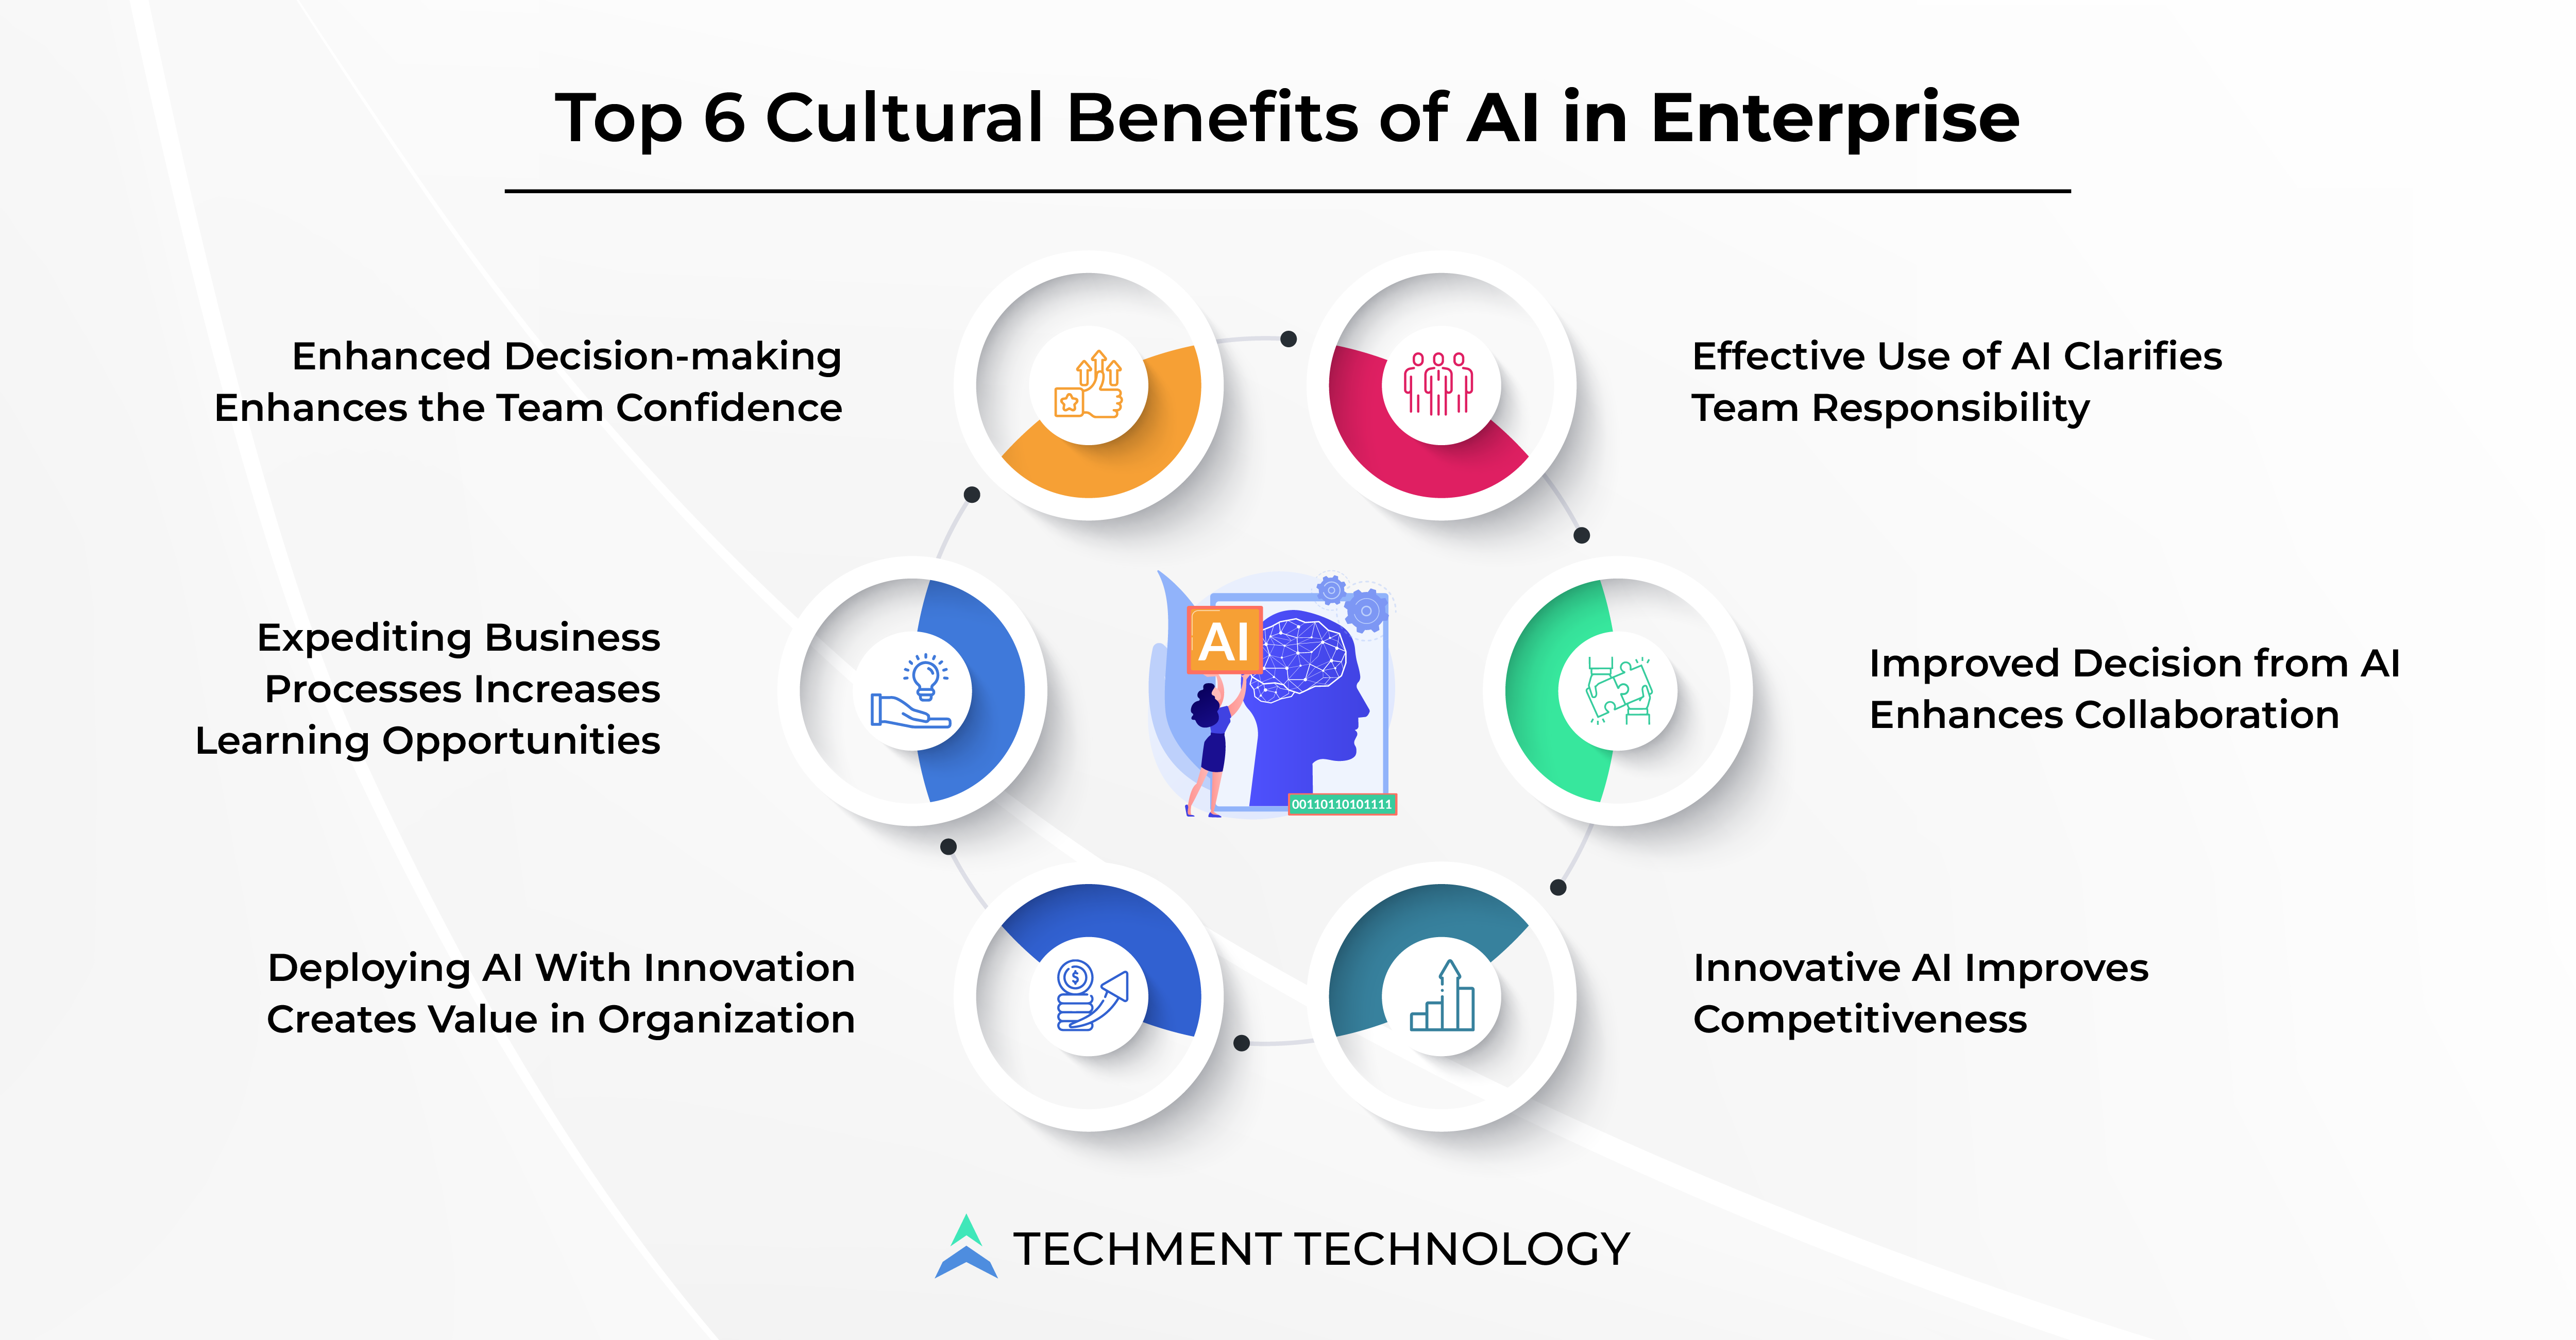 Top 6 Cultural Benefits of AI in Enterprise